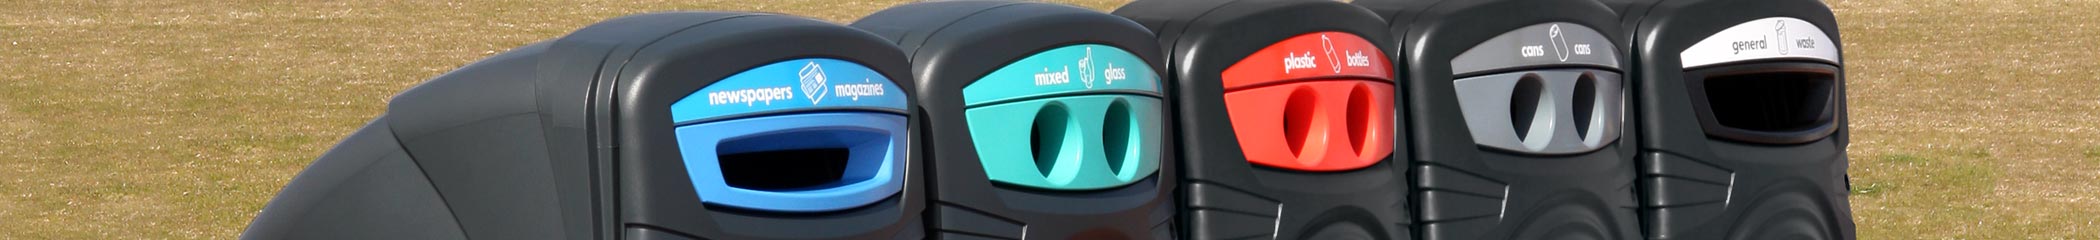 Nexus 360 recycling bins banner